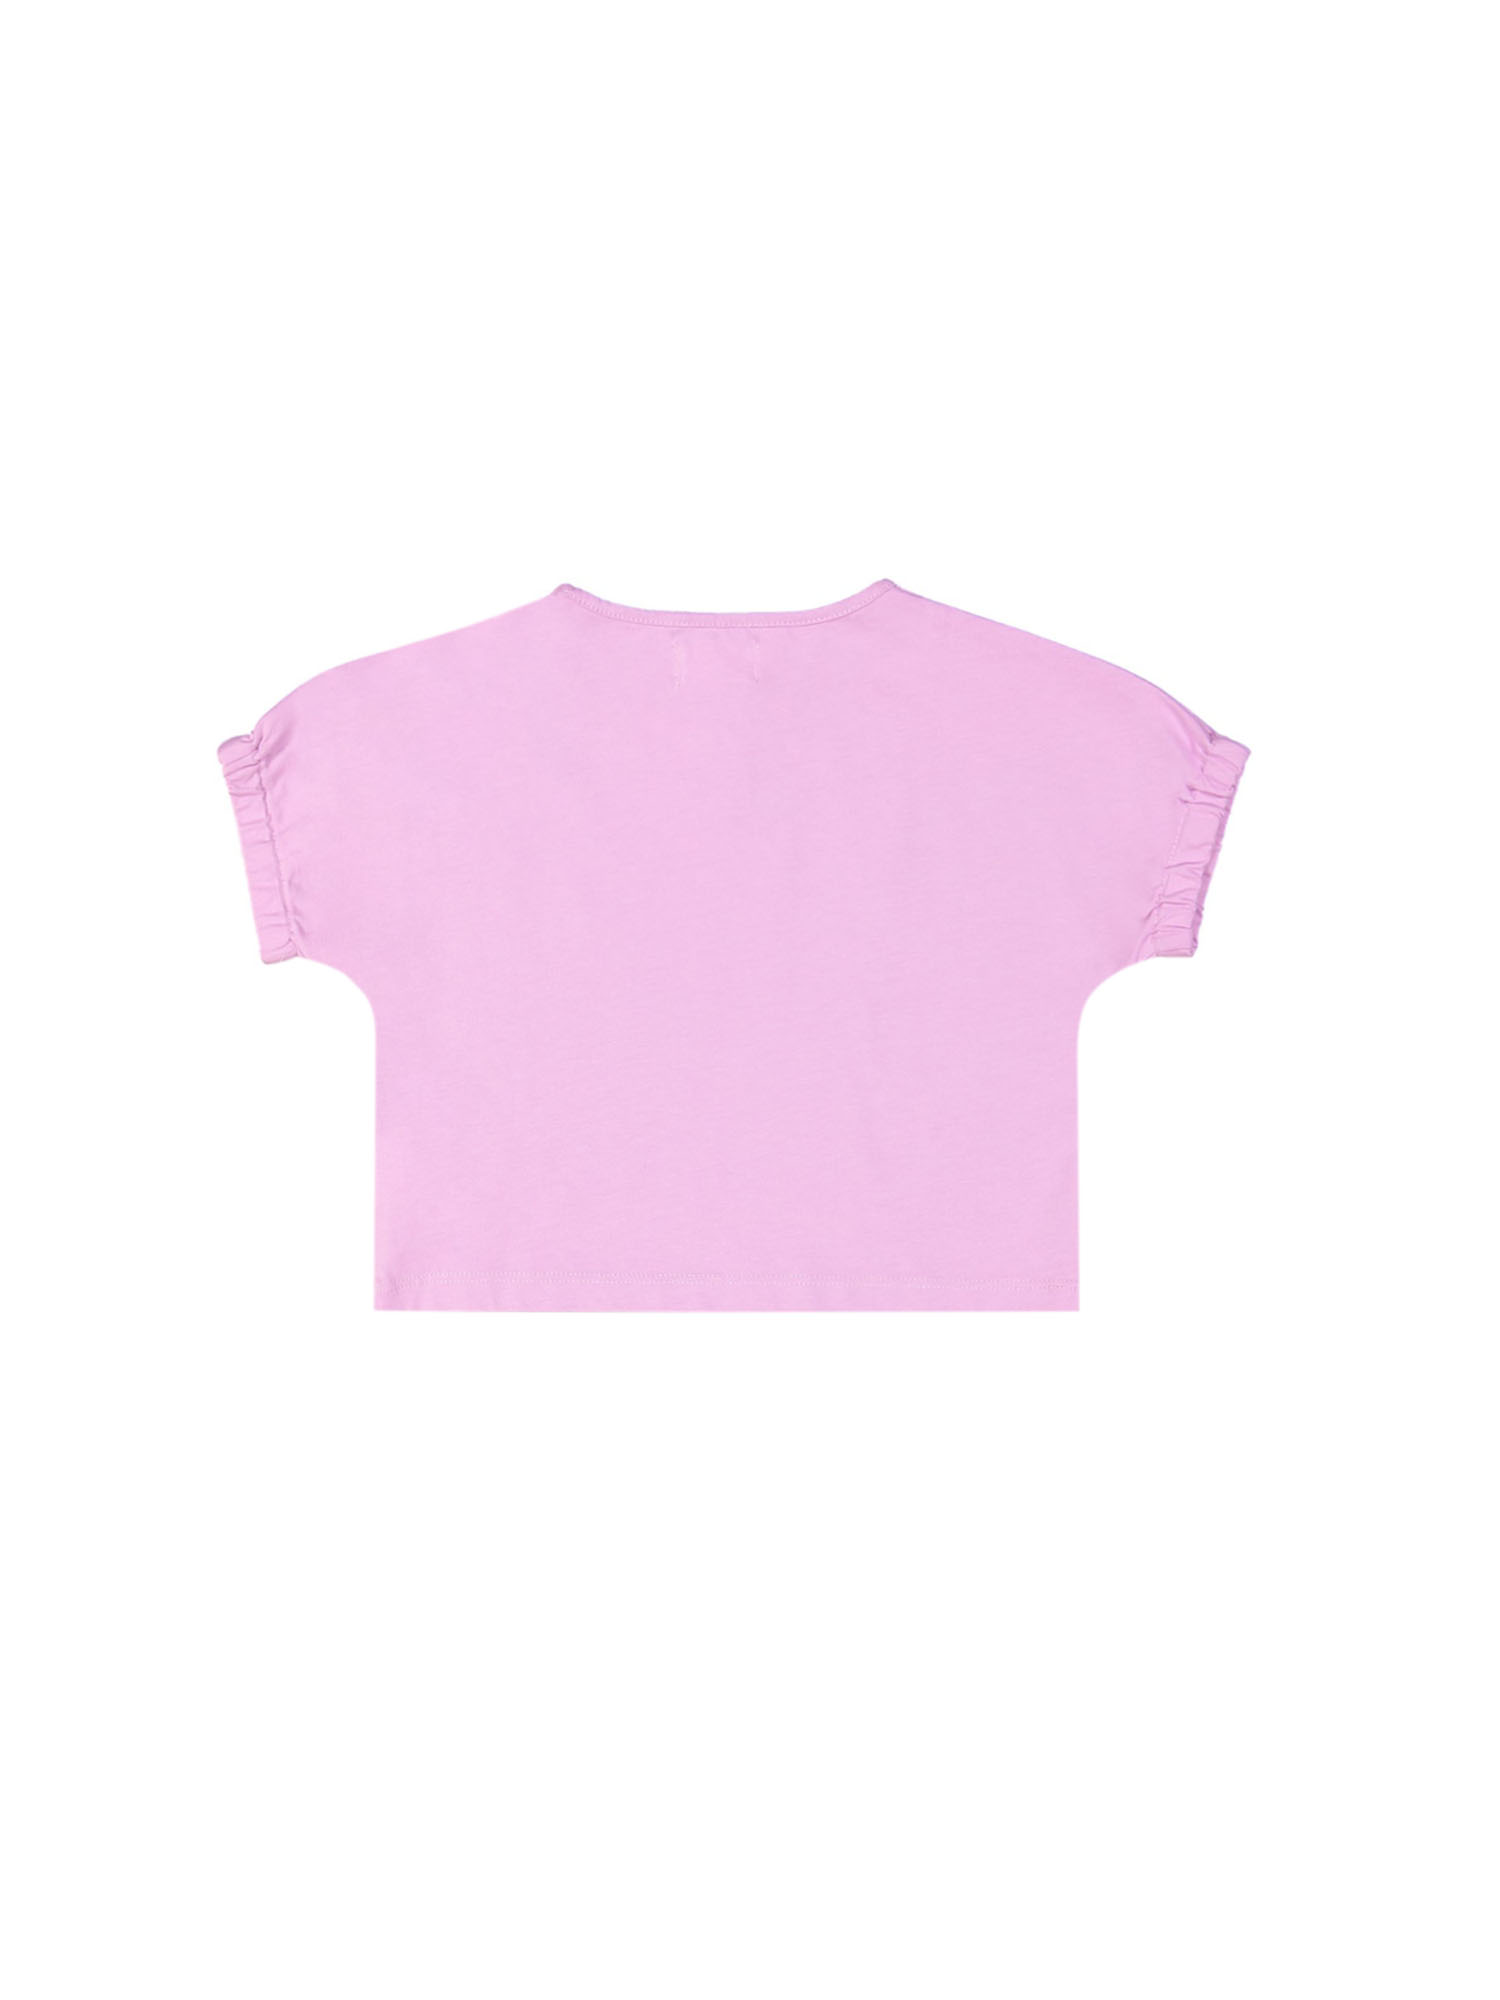 t-shirt hula hoop roze 02j